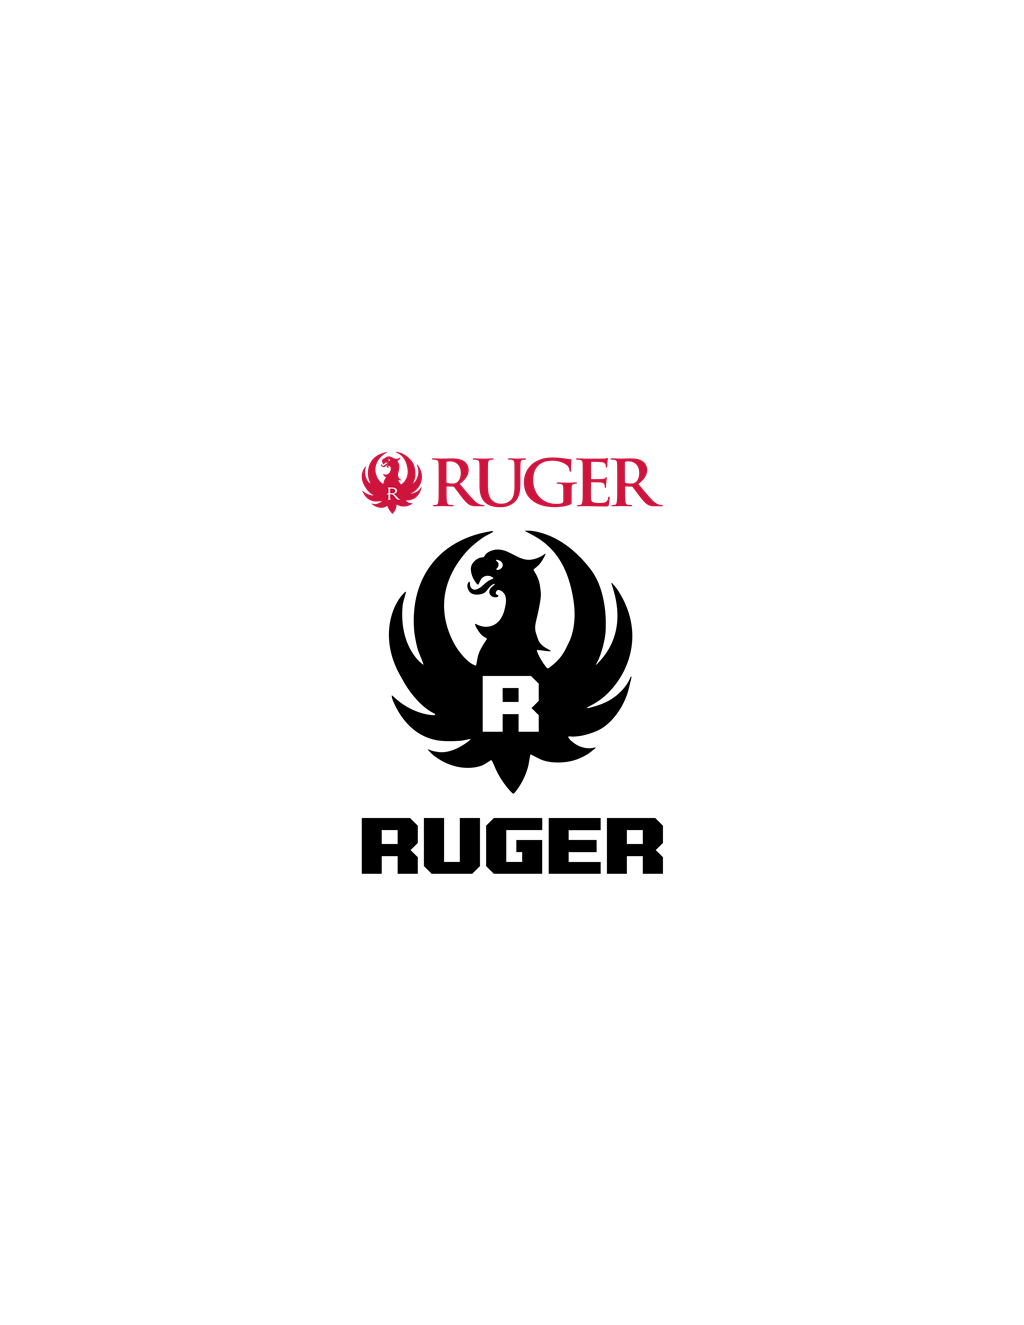 Ruger logotype, transparent .png, medium, large